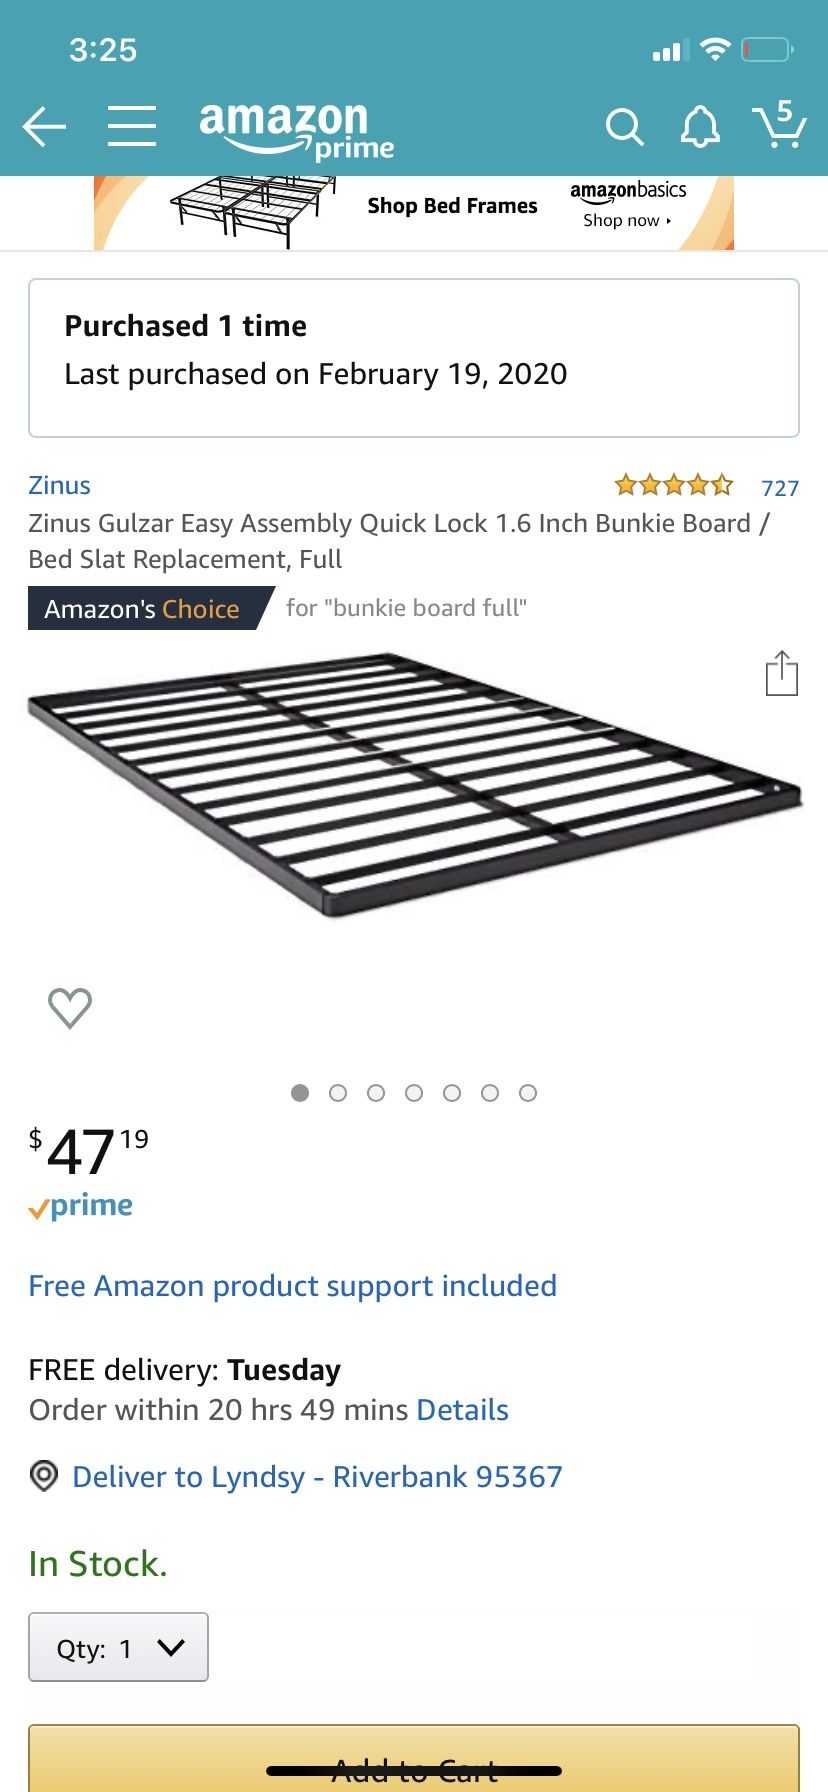 Full size bunker board/ bed slat with adjustable bed rails